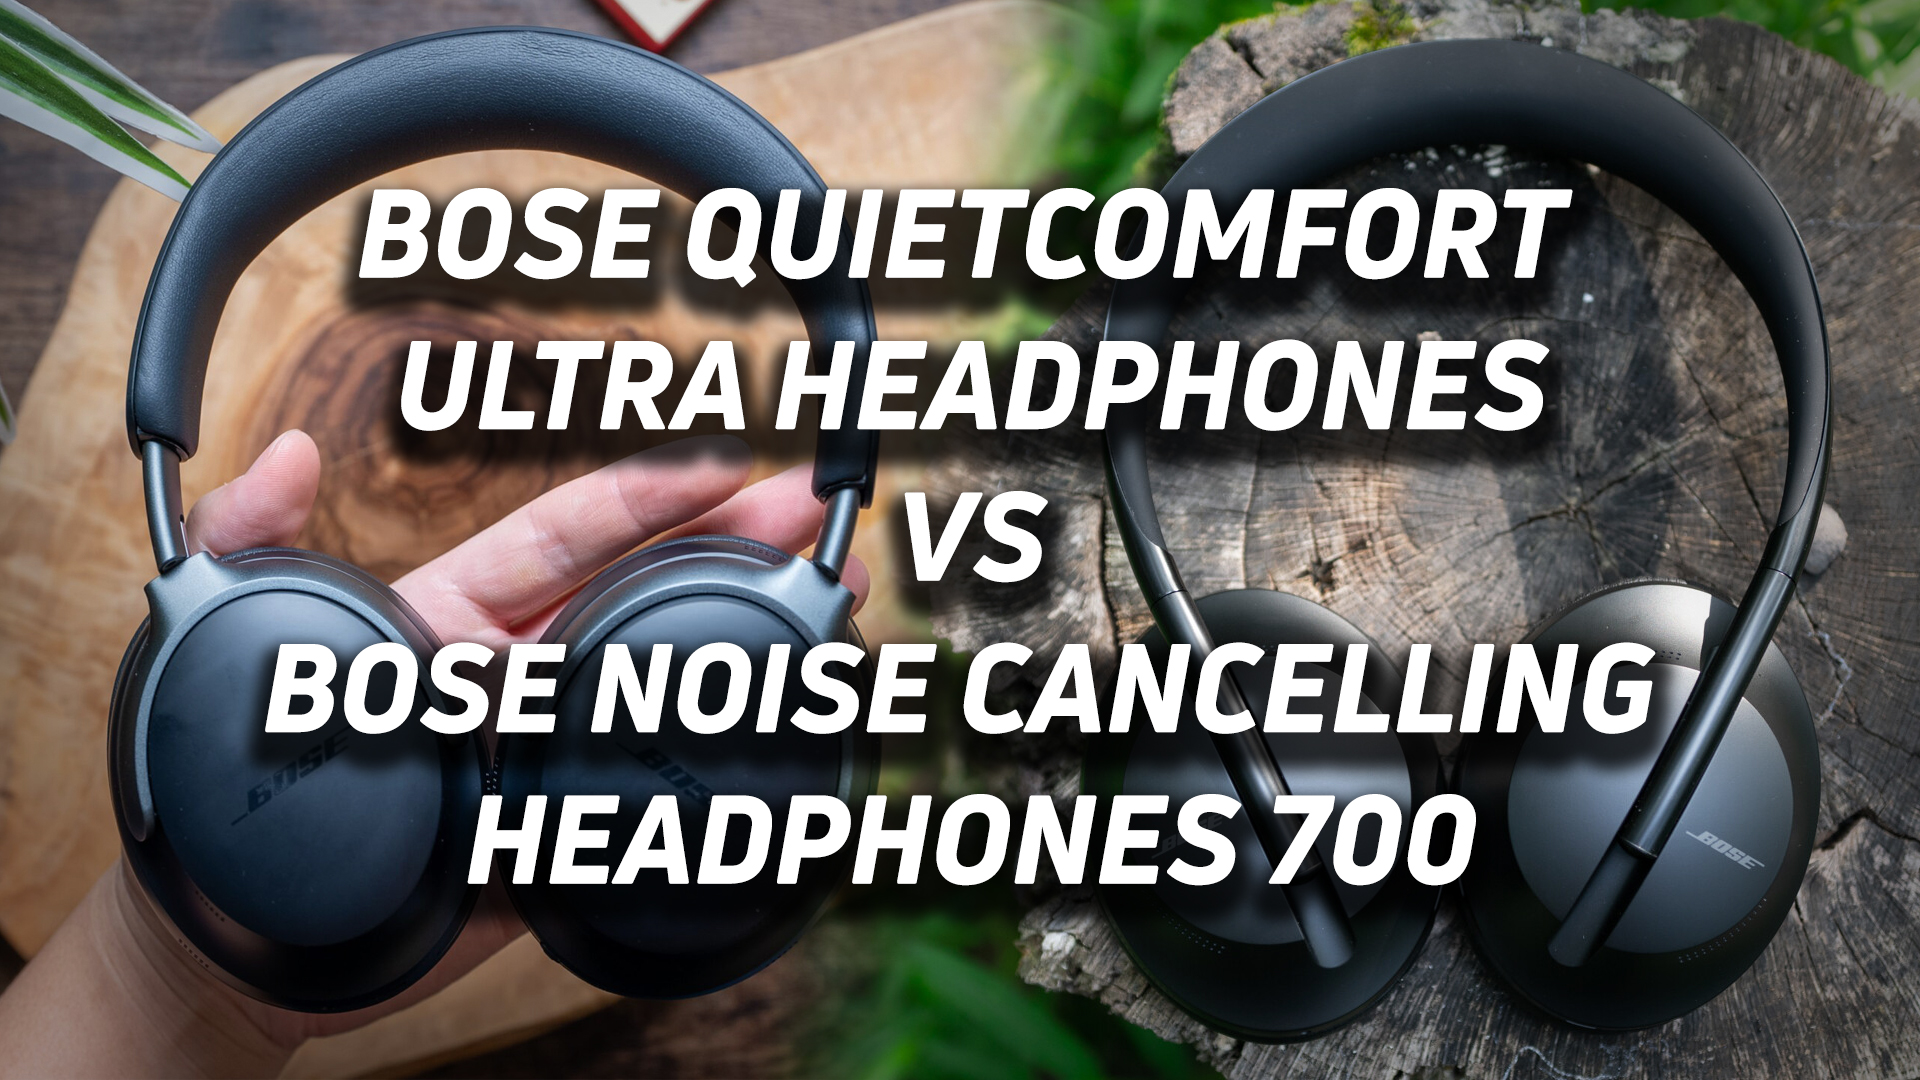 Bose QuietComfort Ultra Headphones vs Bose Noise Cancelling